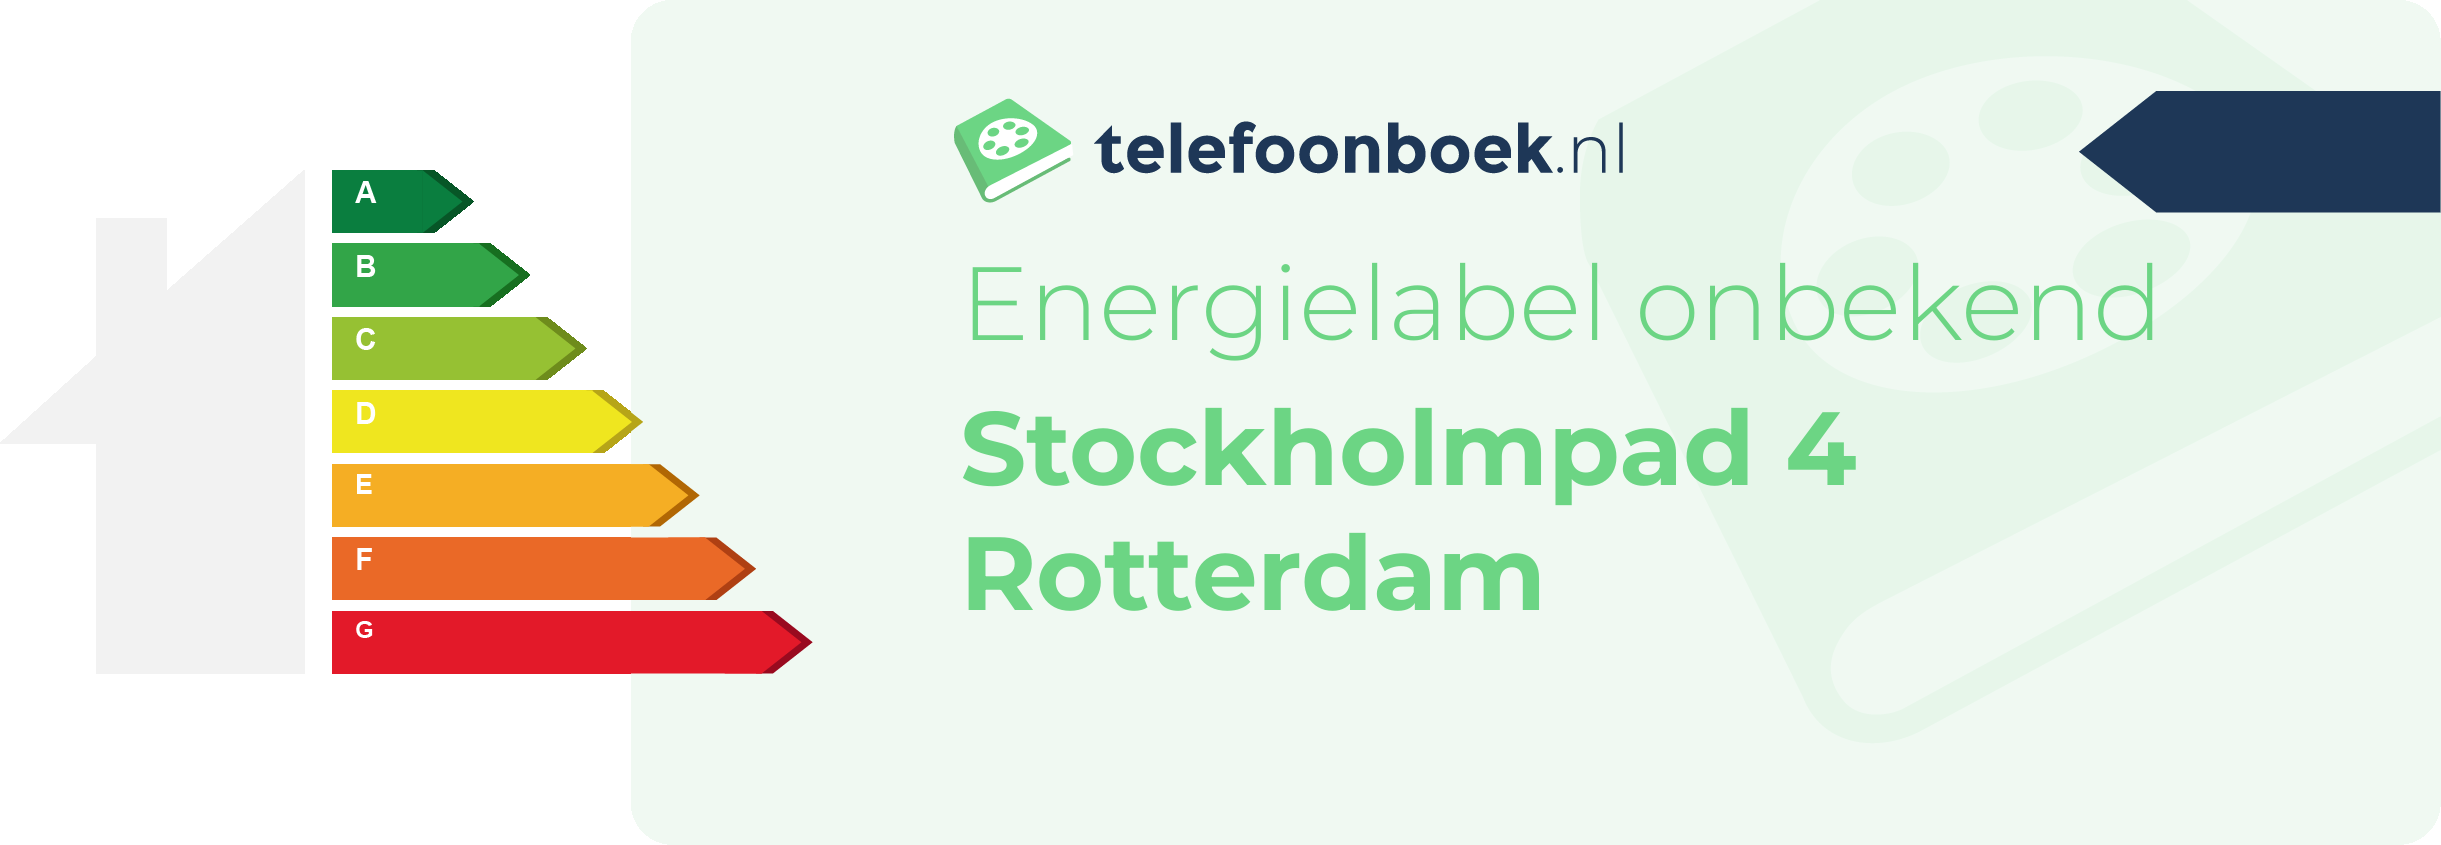 Energielabel Stockholmpad 4 Rotterdam